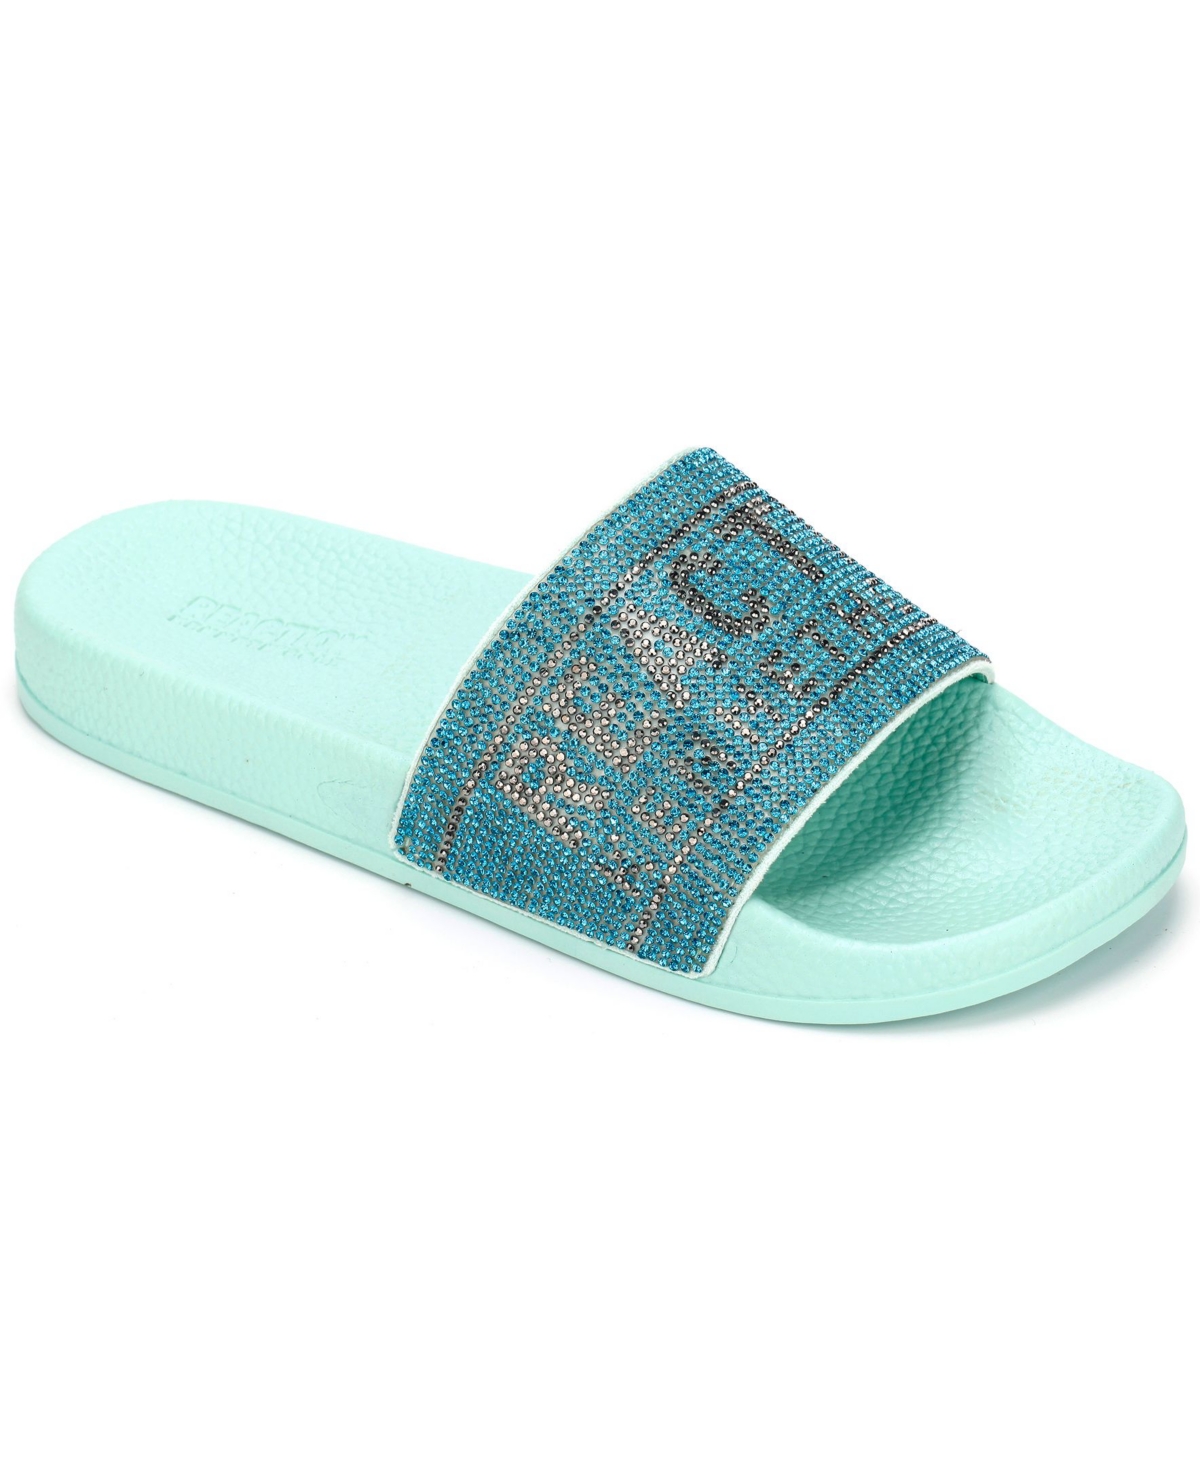 Women's Screen Jewl Slides Flat Sandals - Turquoise